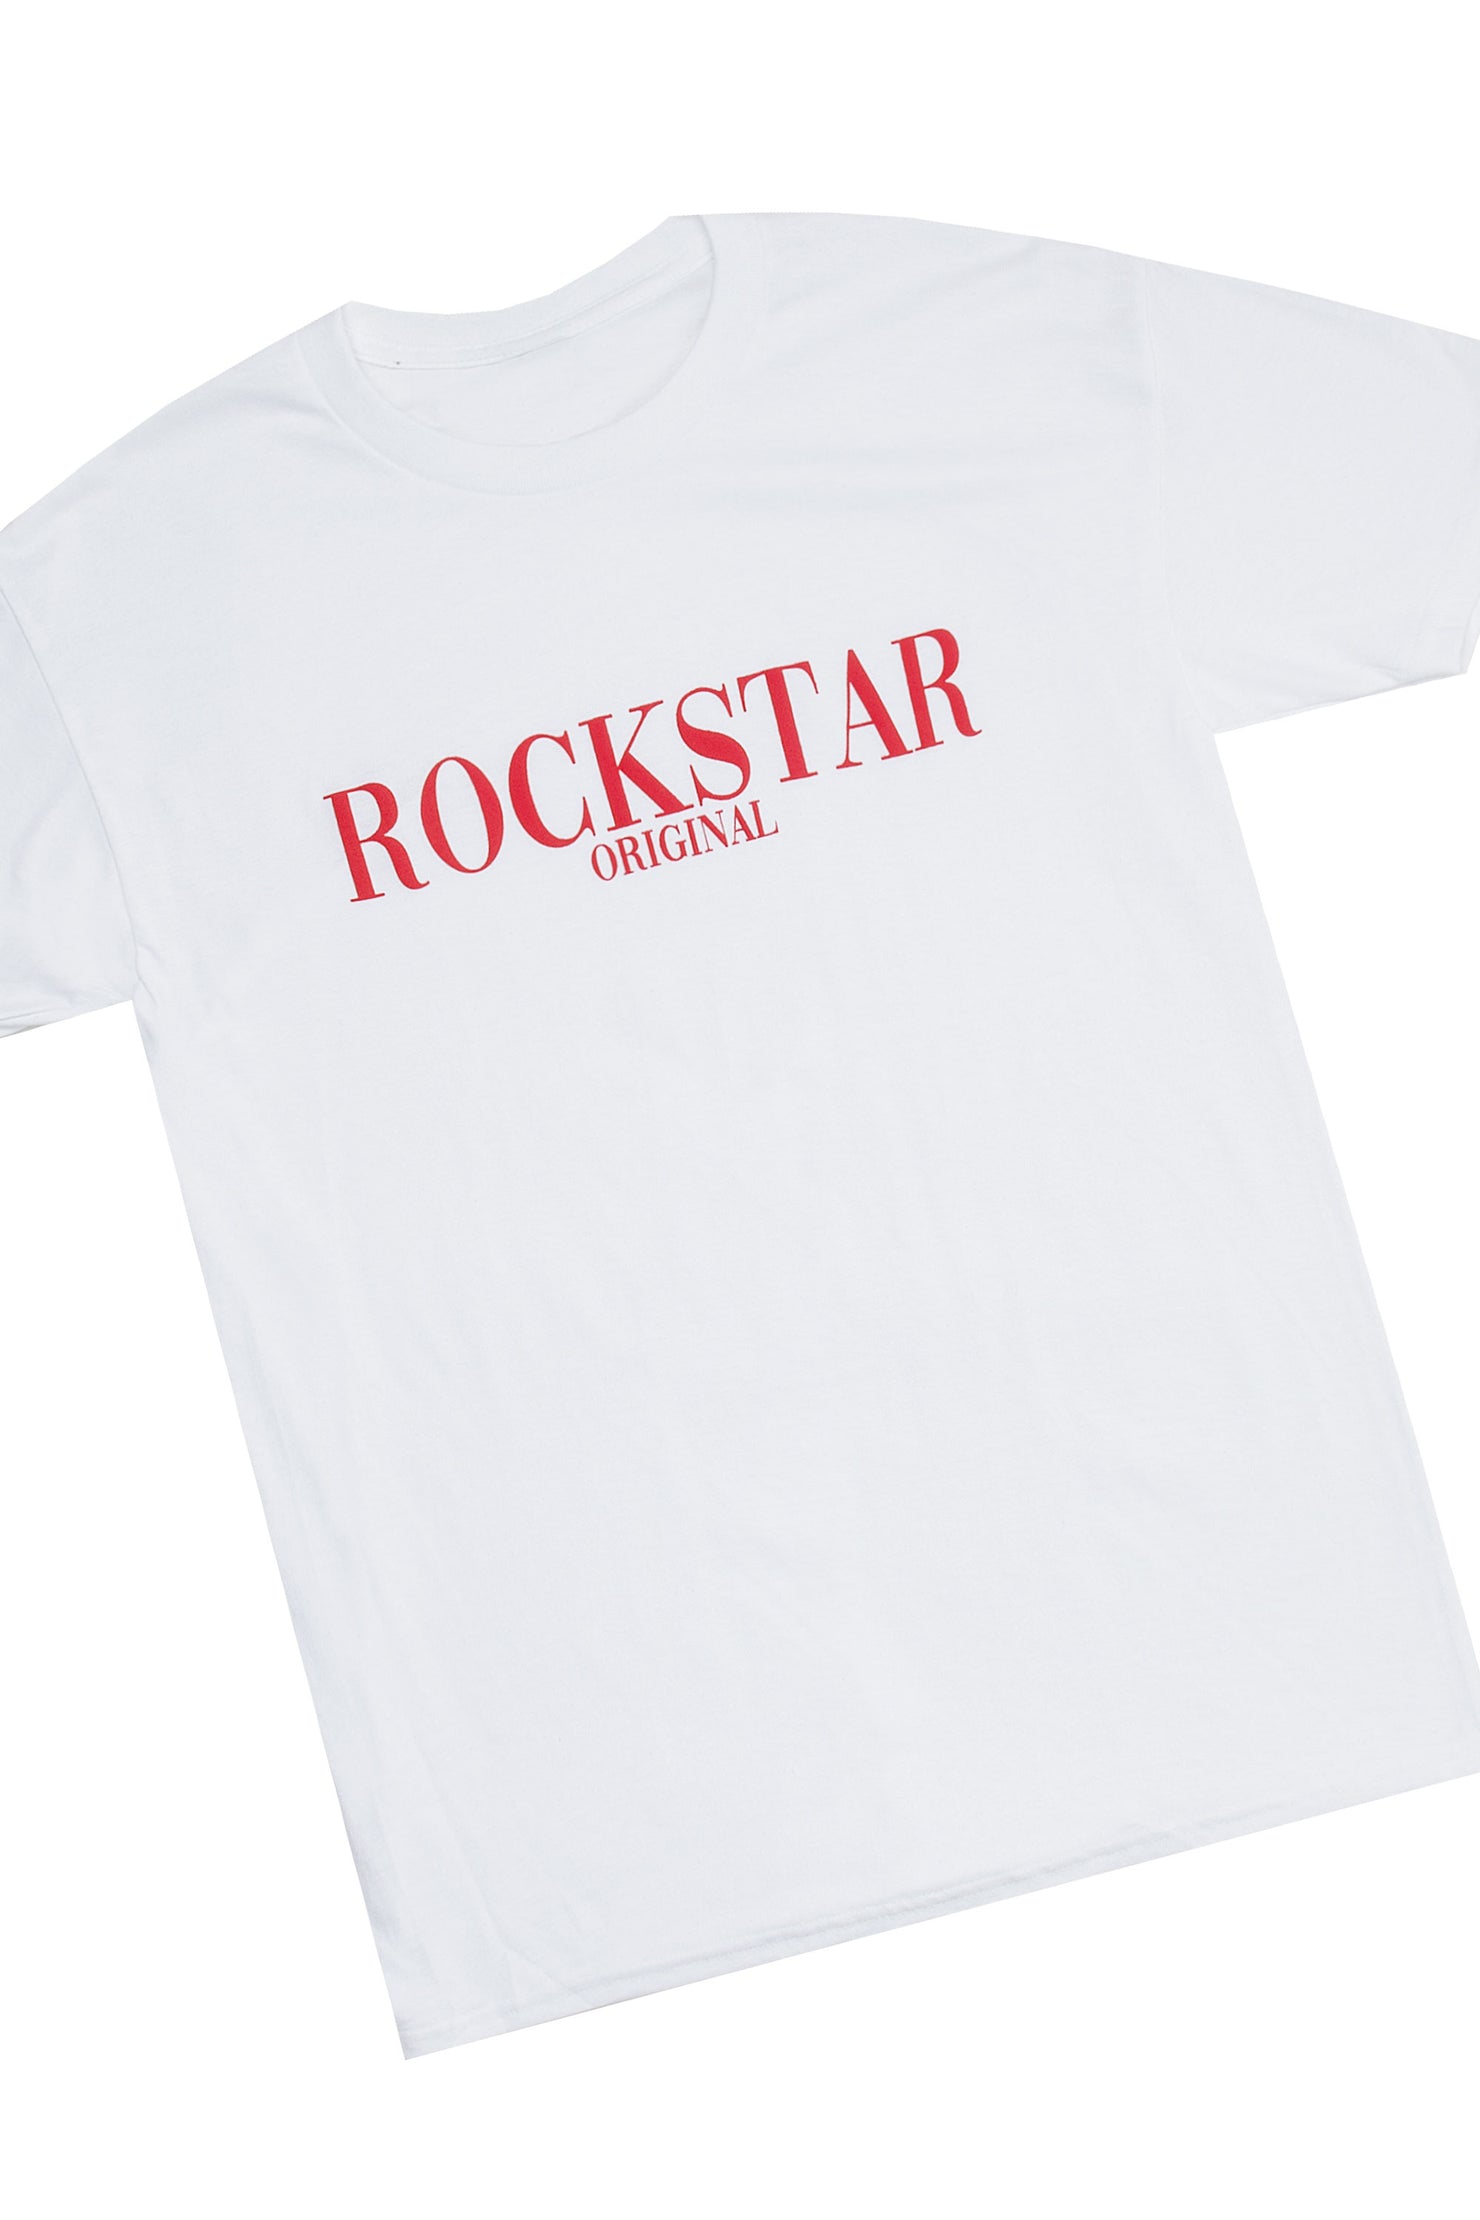 Octavio White/Red Basic T-Shirt Short Set